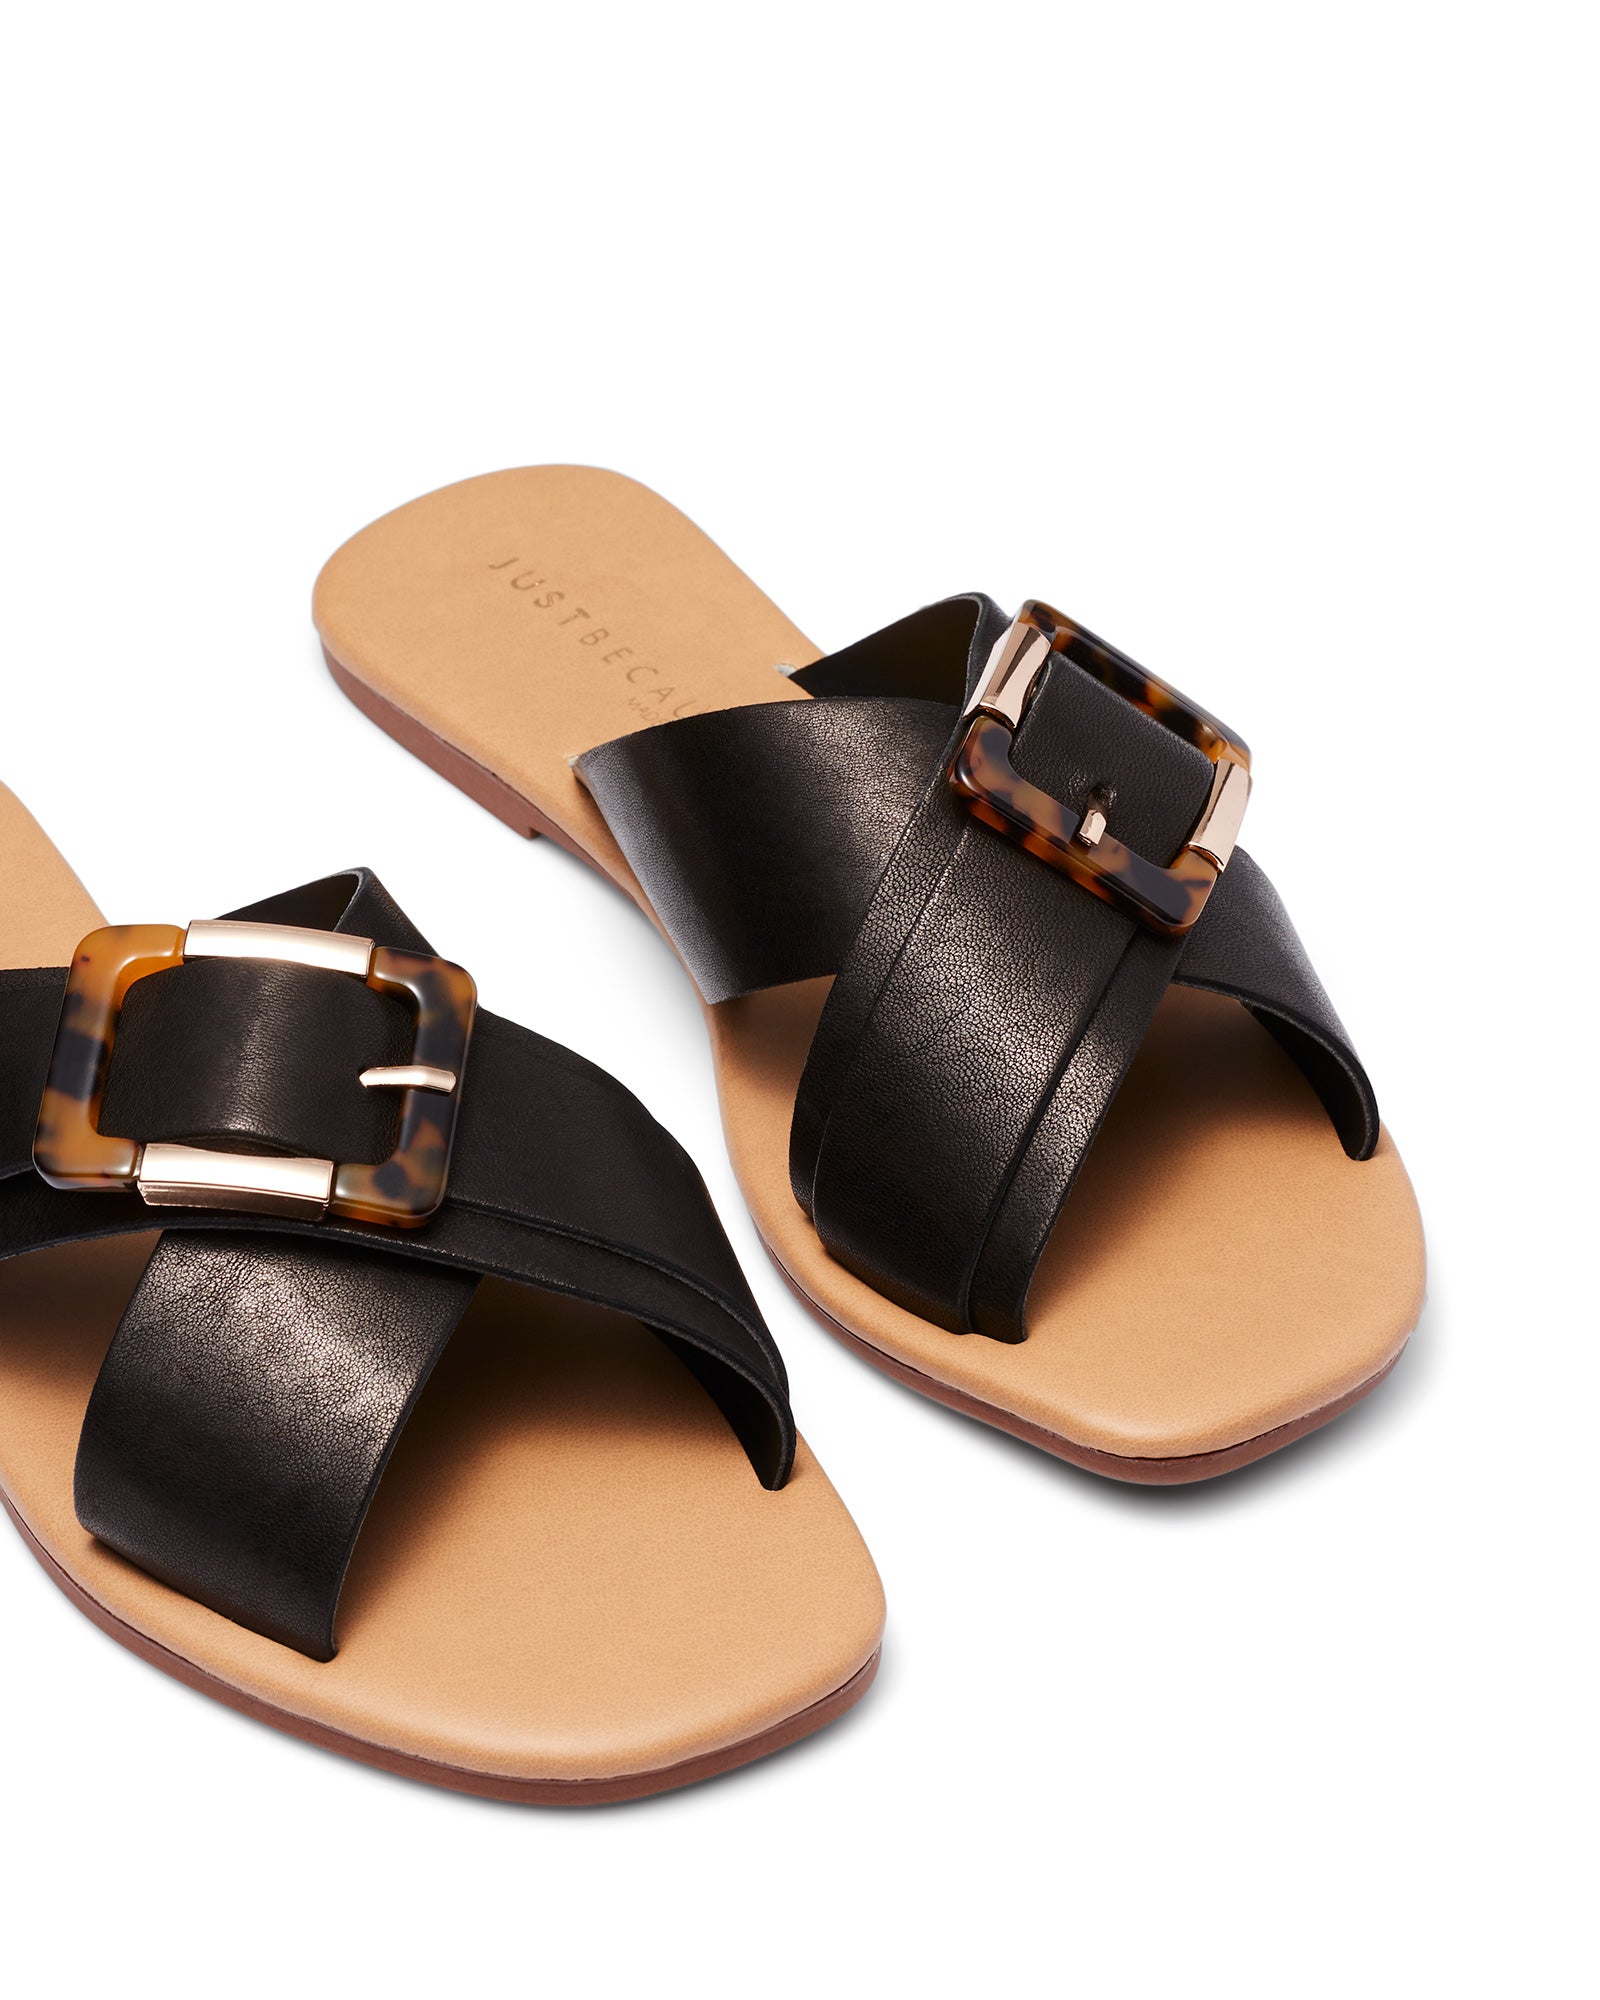 Just Because Shoes Rimini Black | Leather Sandals | Slides | Flats